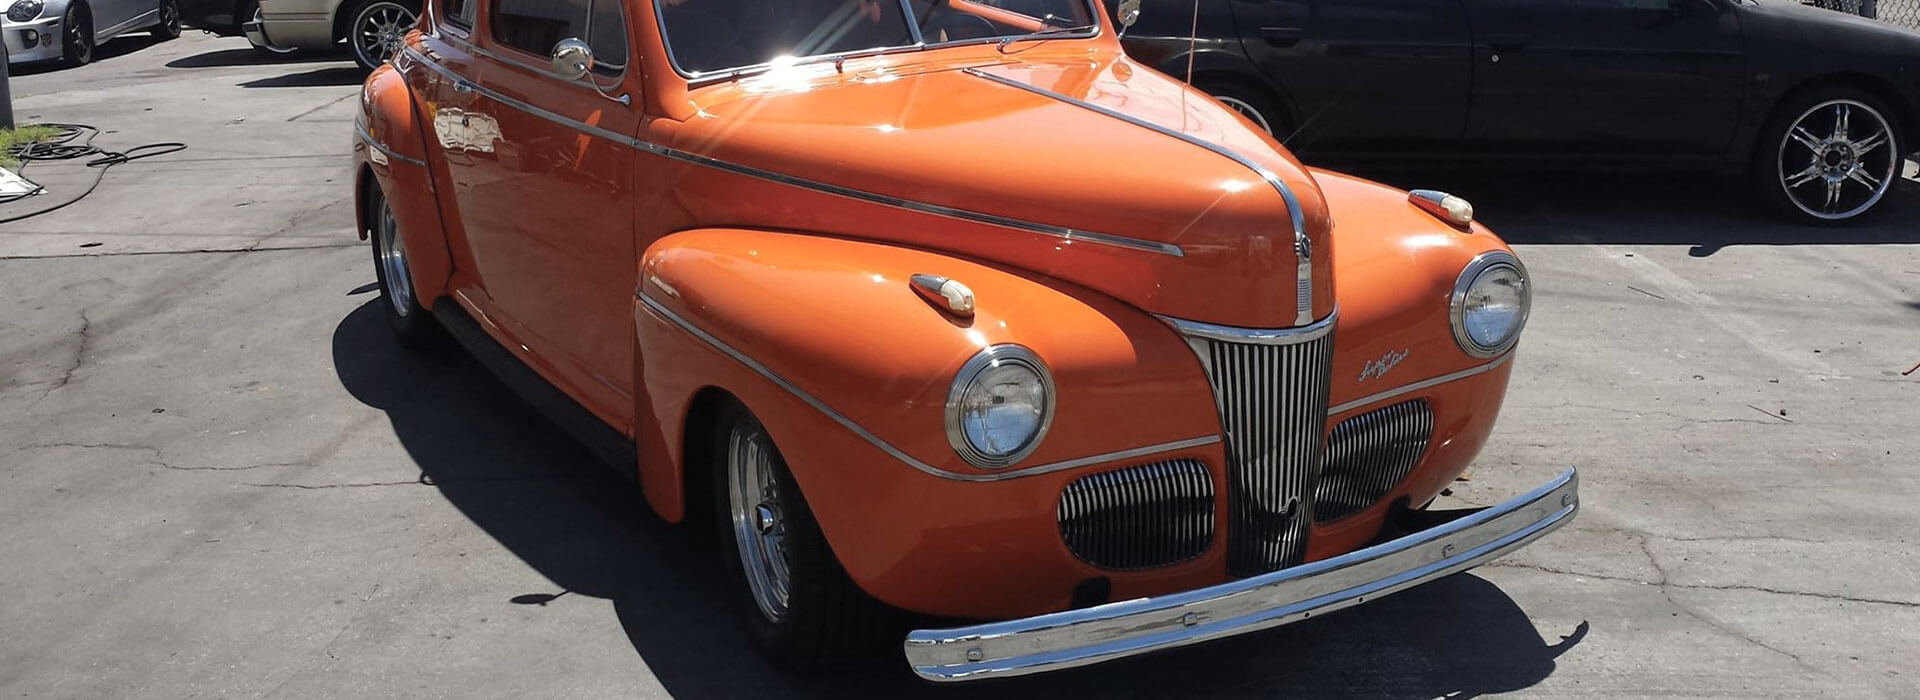 Orange old car